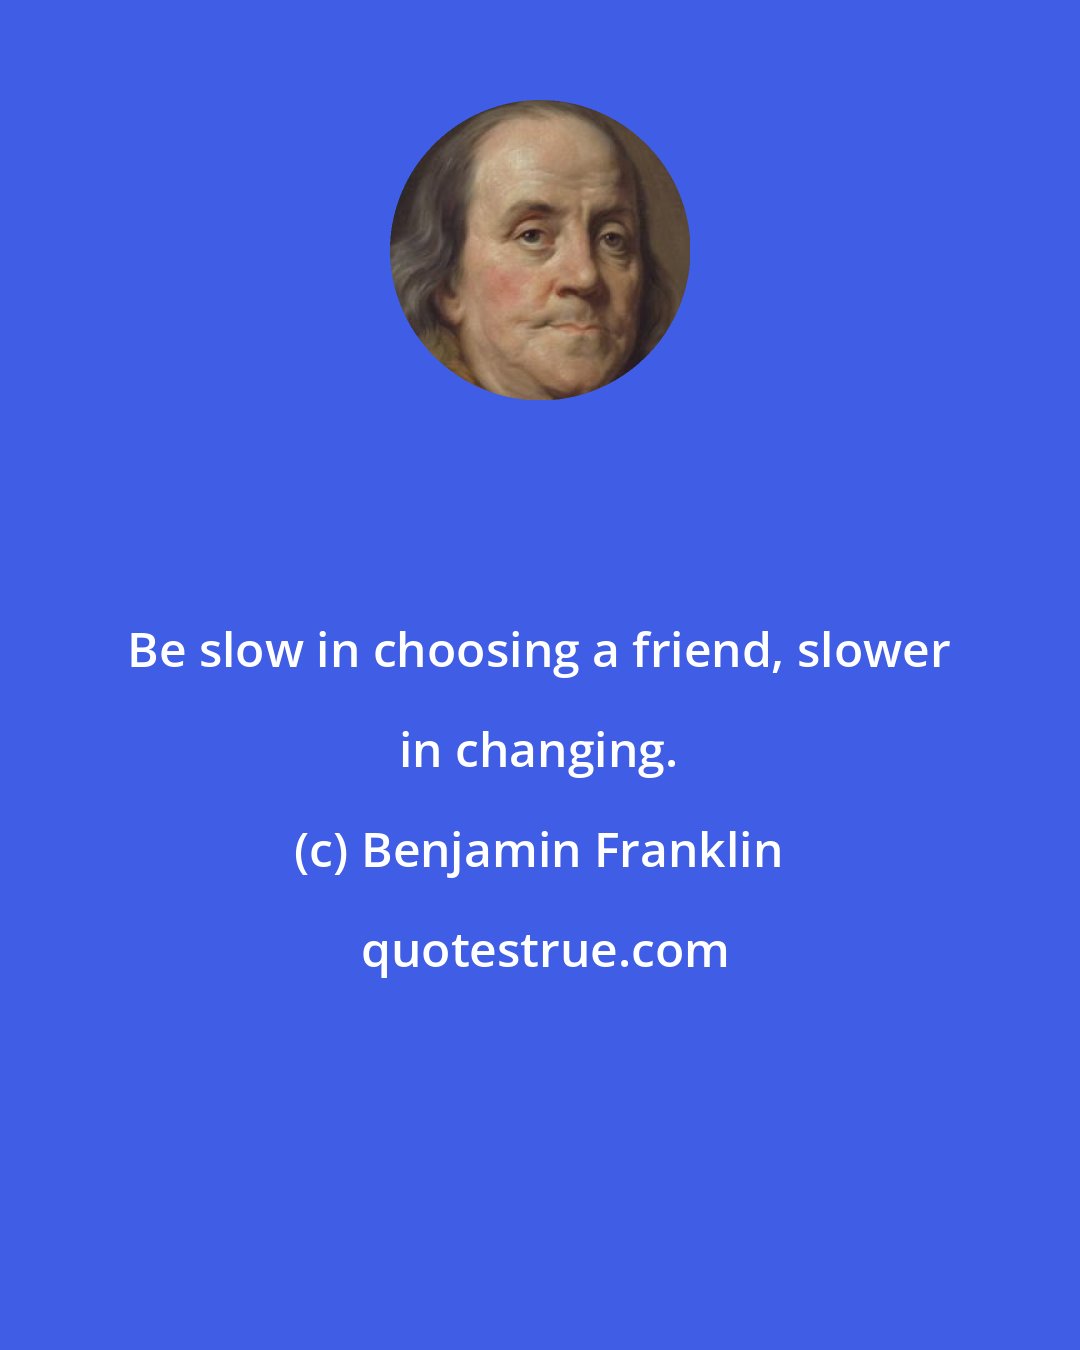 Benjamin Franklin: Be slow in choosing a friend, slower in changing.